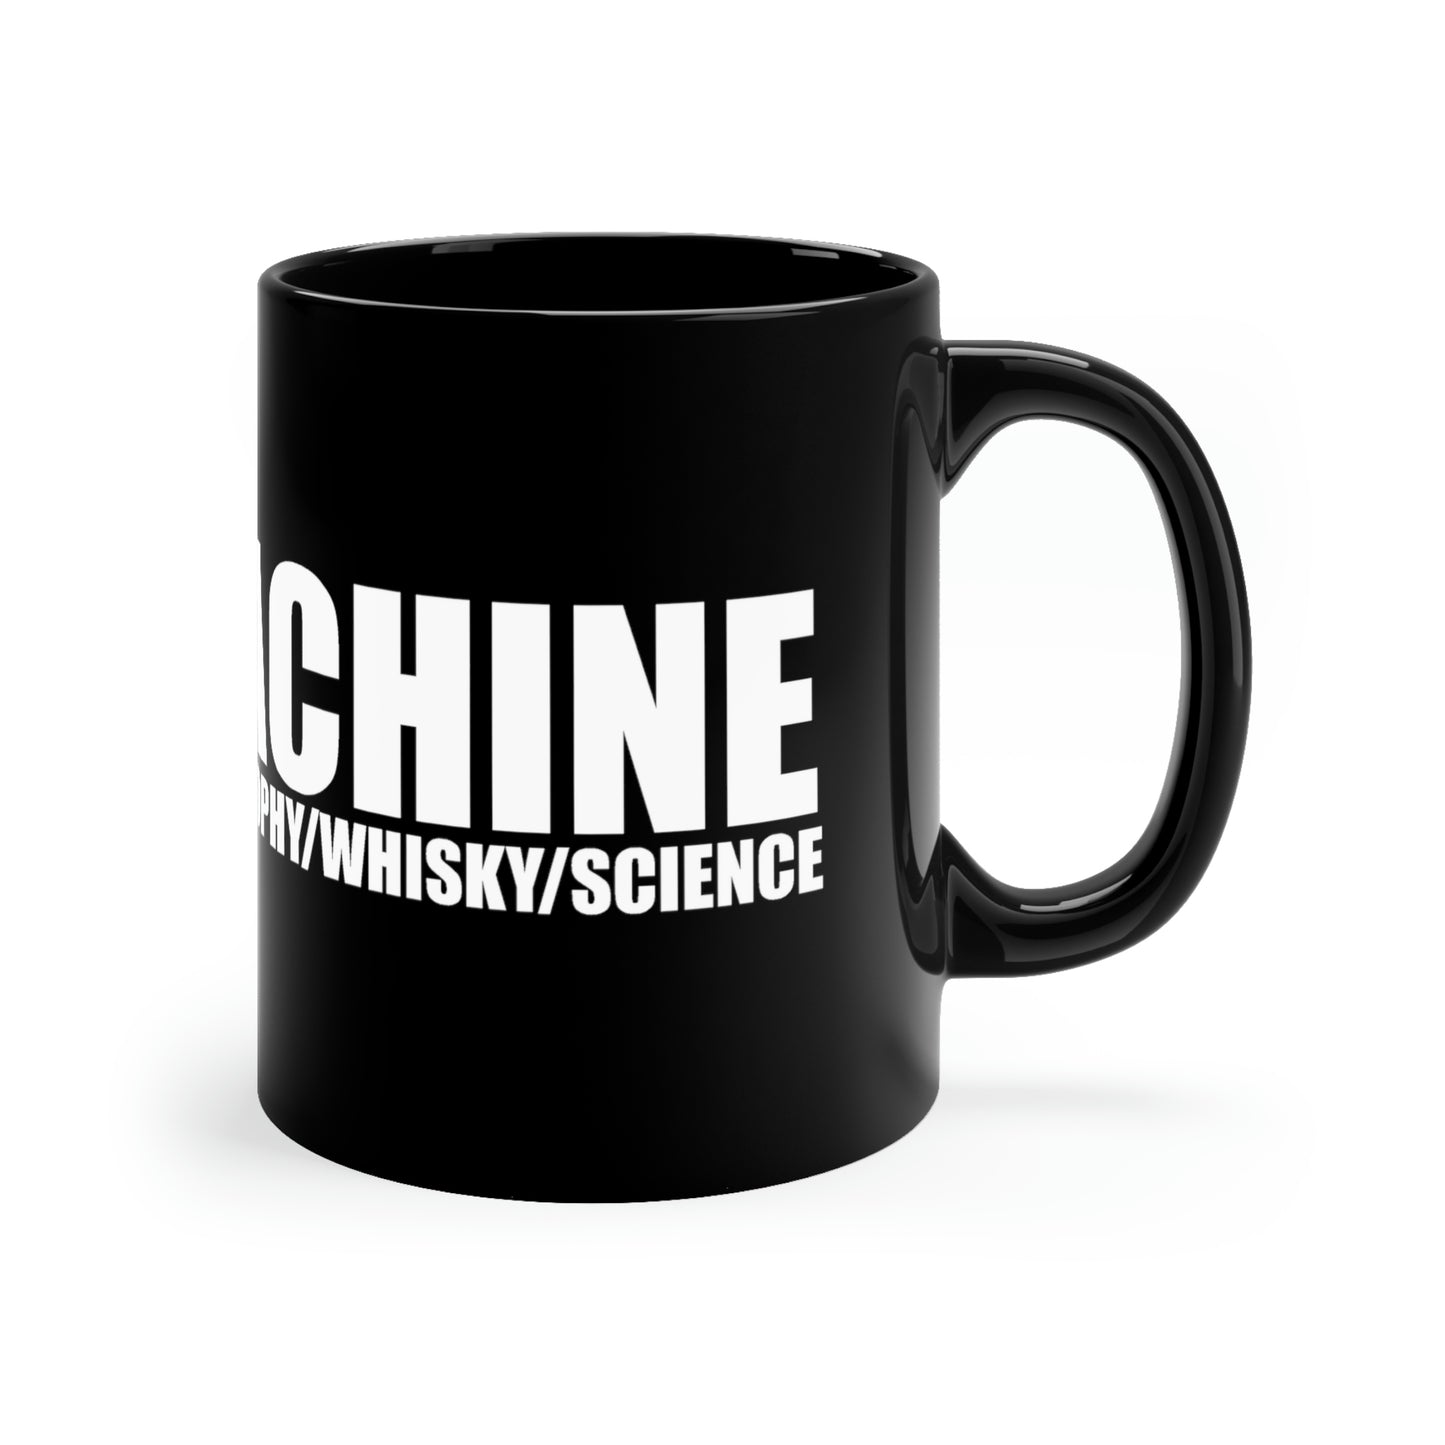 Godmachine Logo Mug [Black]